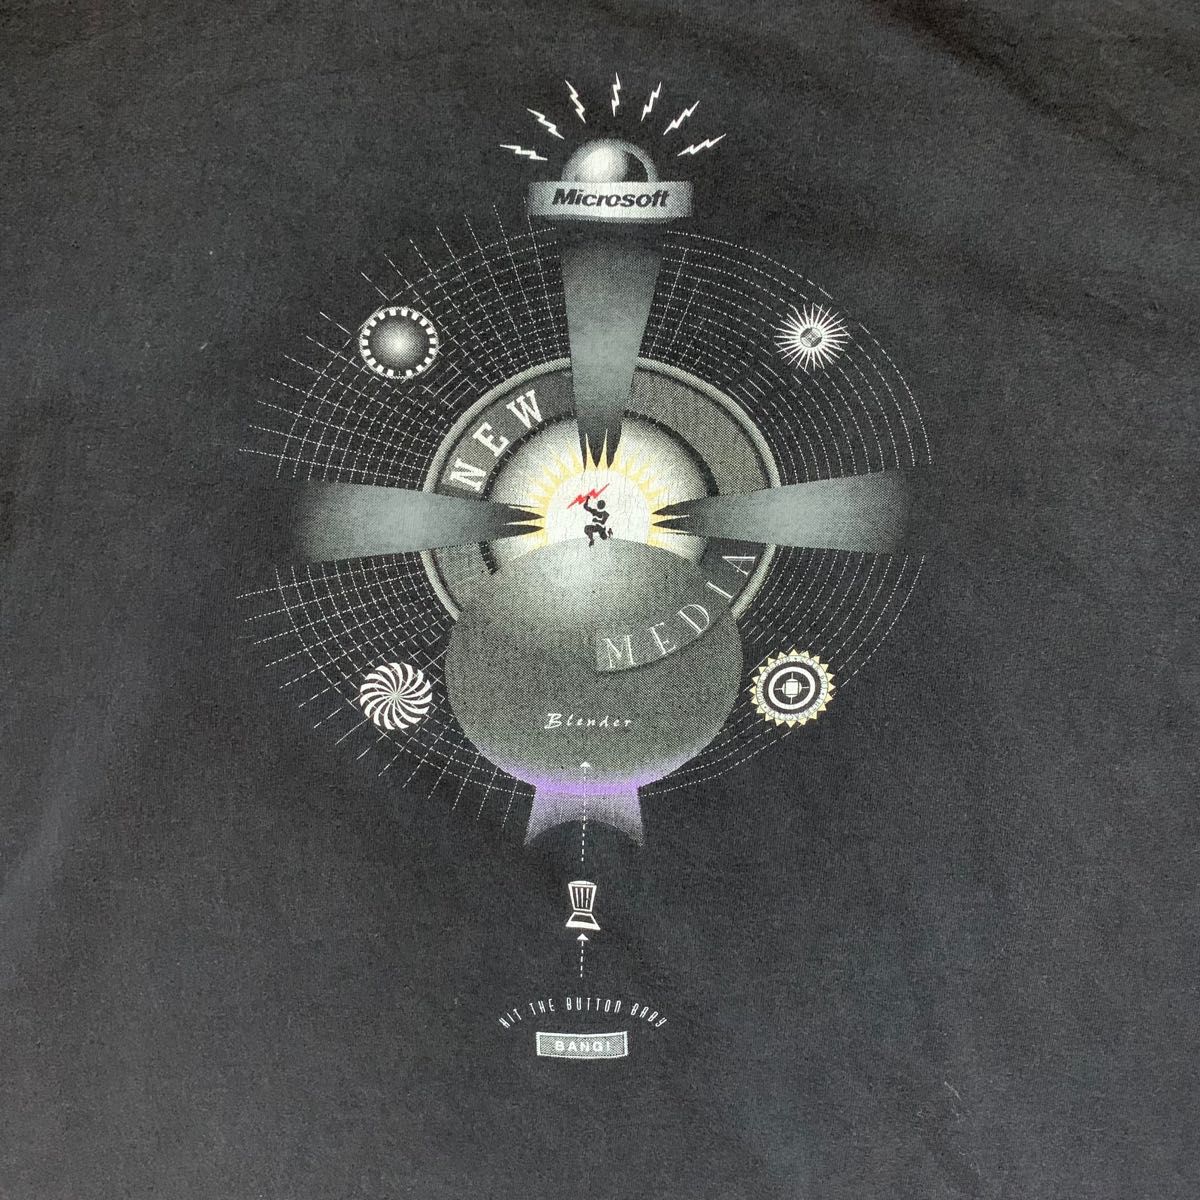 msn microsoft【マイクロソフト】90s vintage 企業 Tシャツ